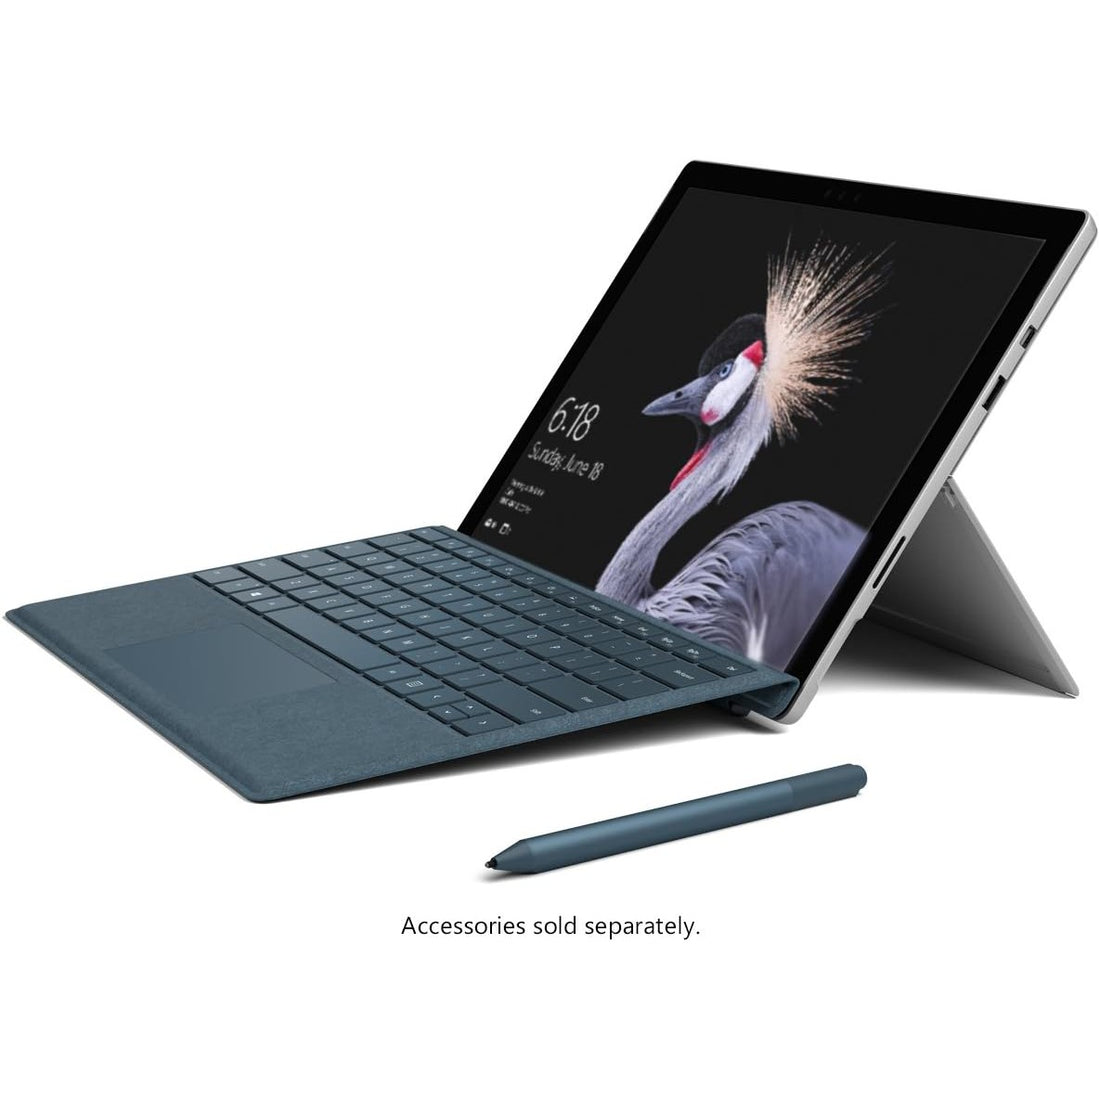 Microsoft Surface Pro 5 Intel Core i7-7660U 8GB RAM 256GB SSD 12.3" - Silver - Pristine